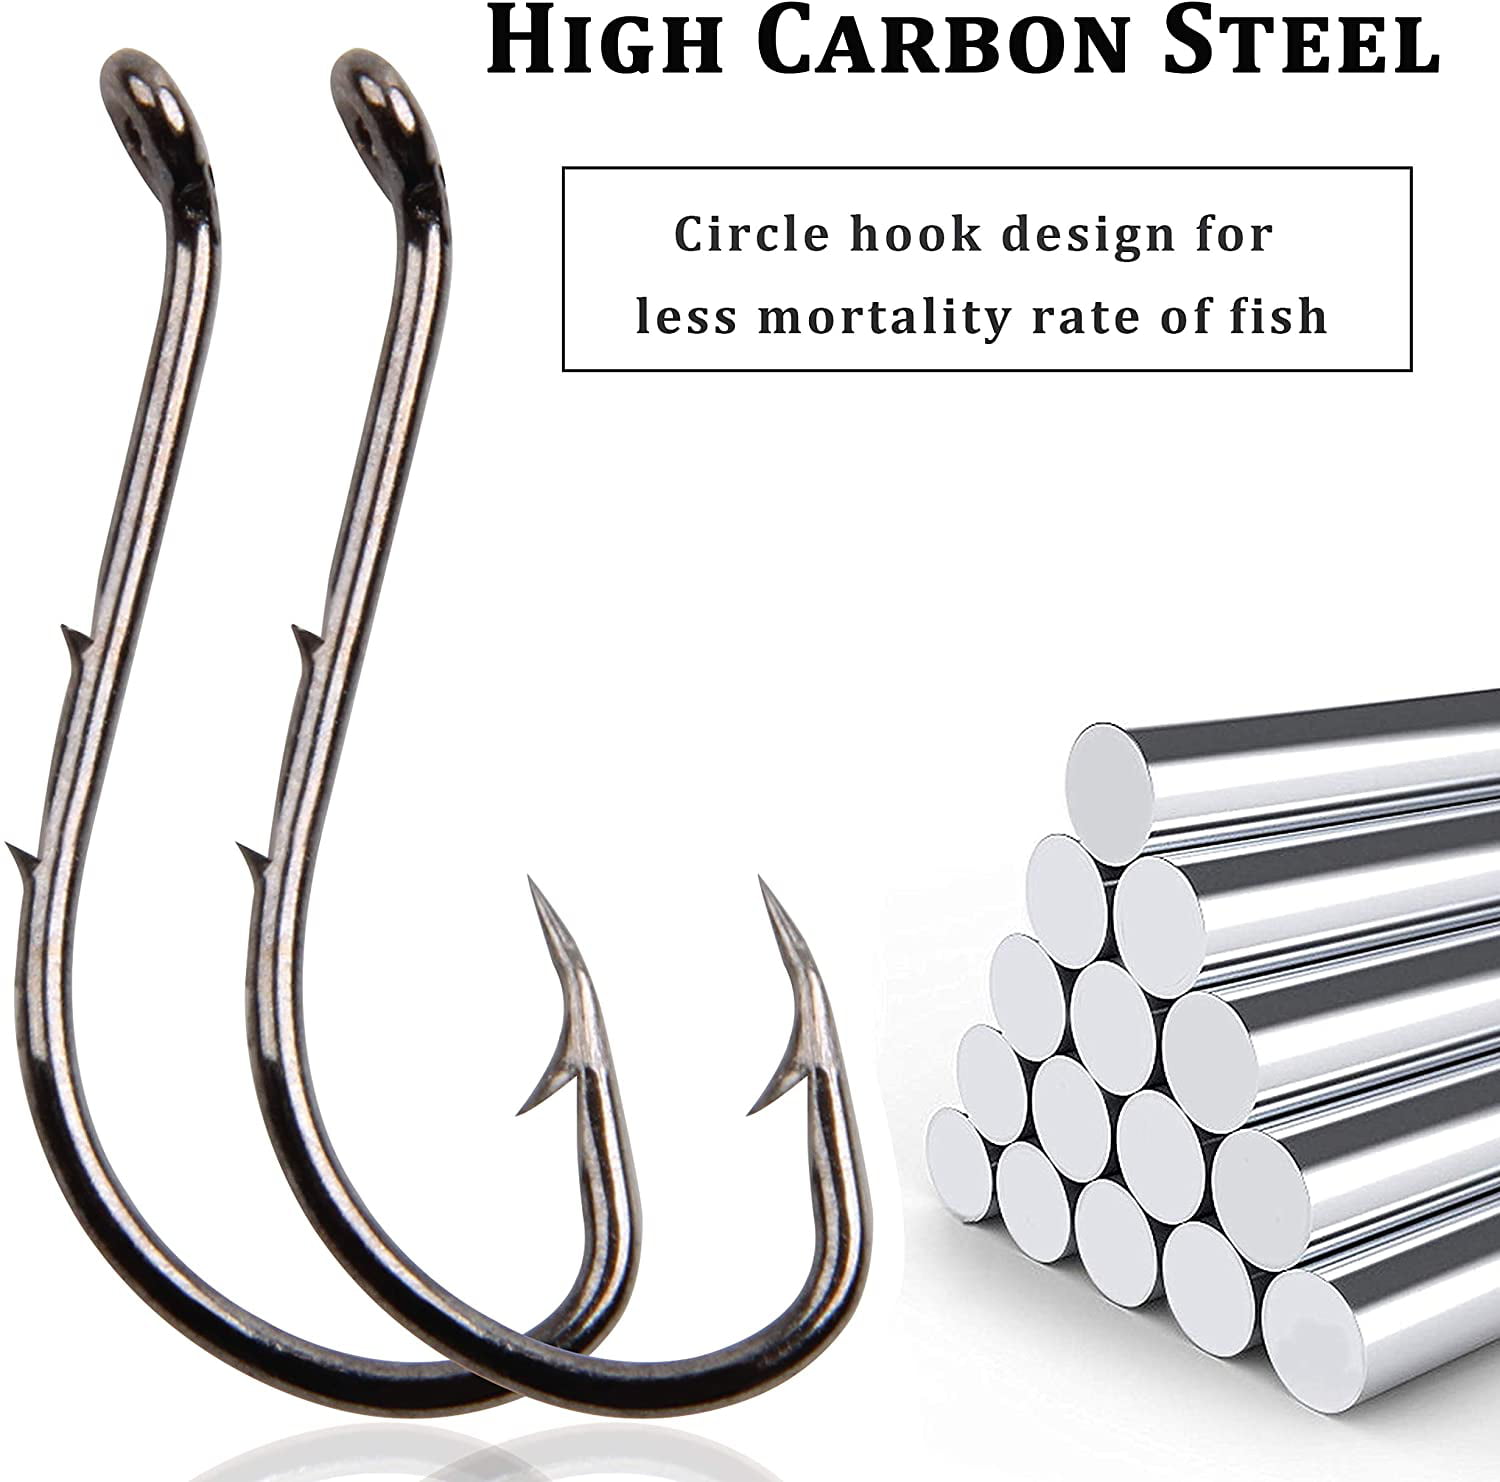 160 Offset Circle Fishing HOOKS W/ Box Black High Carbon Steel Sizes #1-5/0